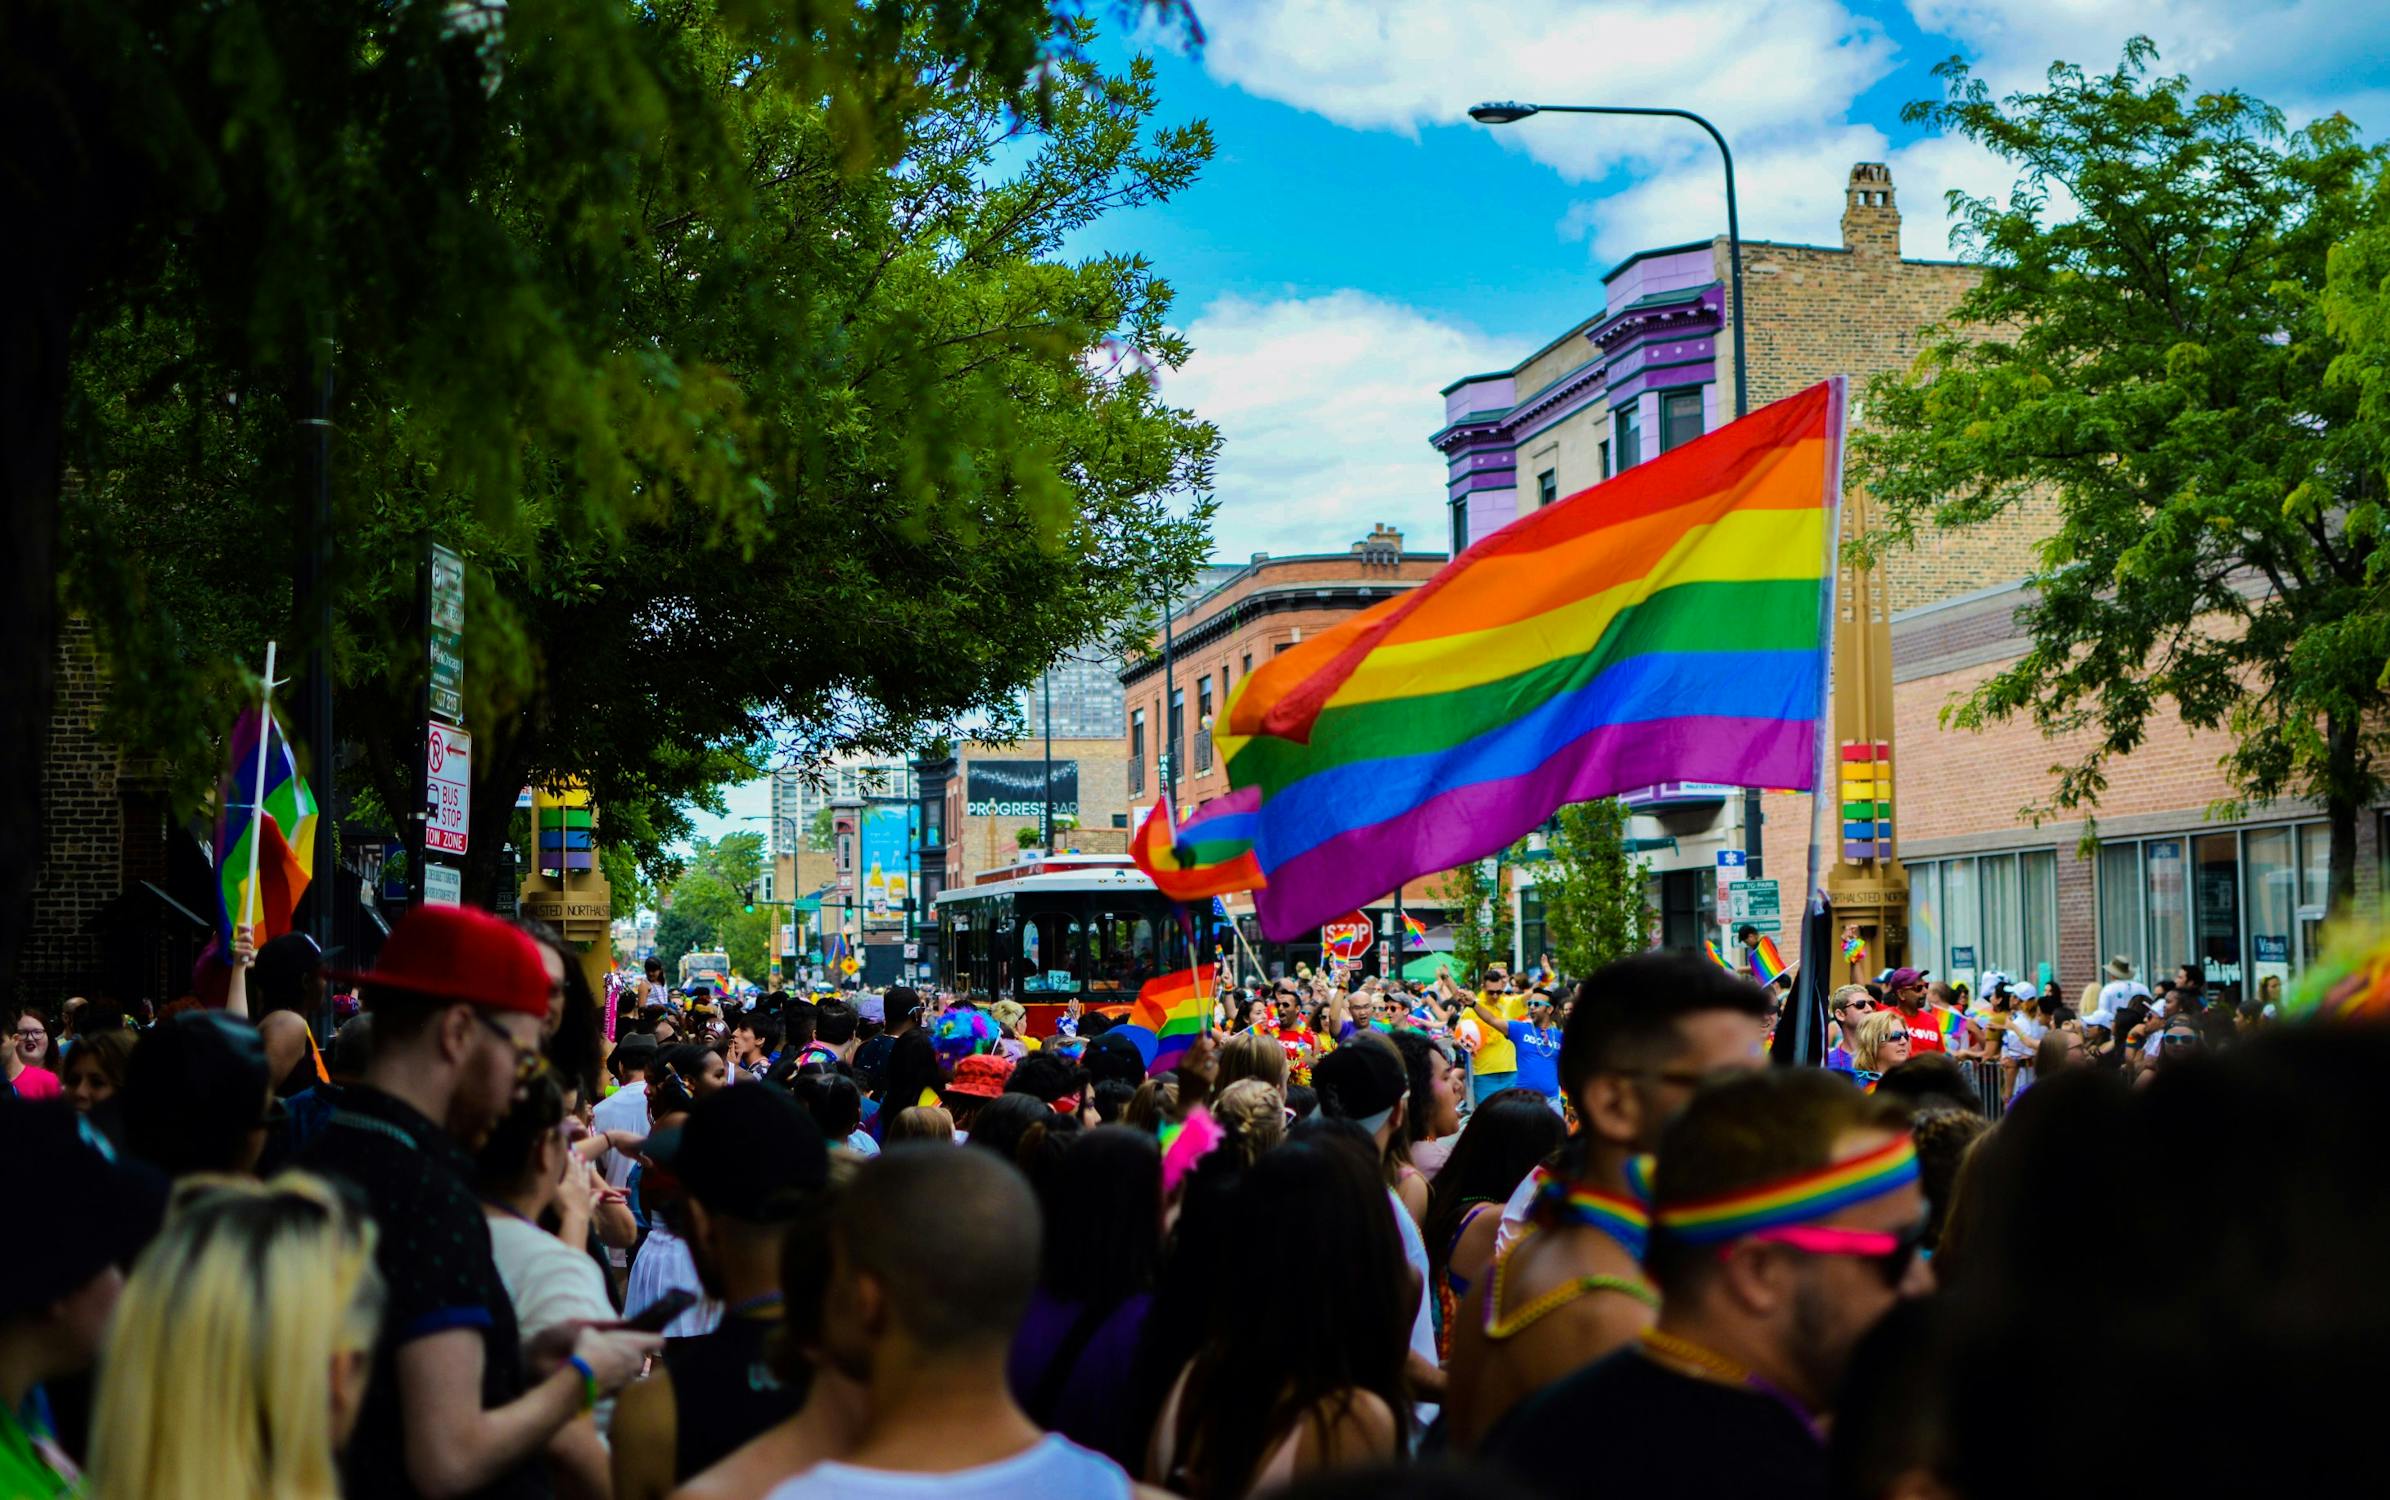 Celebrate Diversity at the Memphis Pride Parade